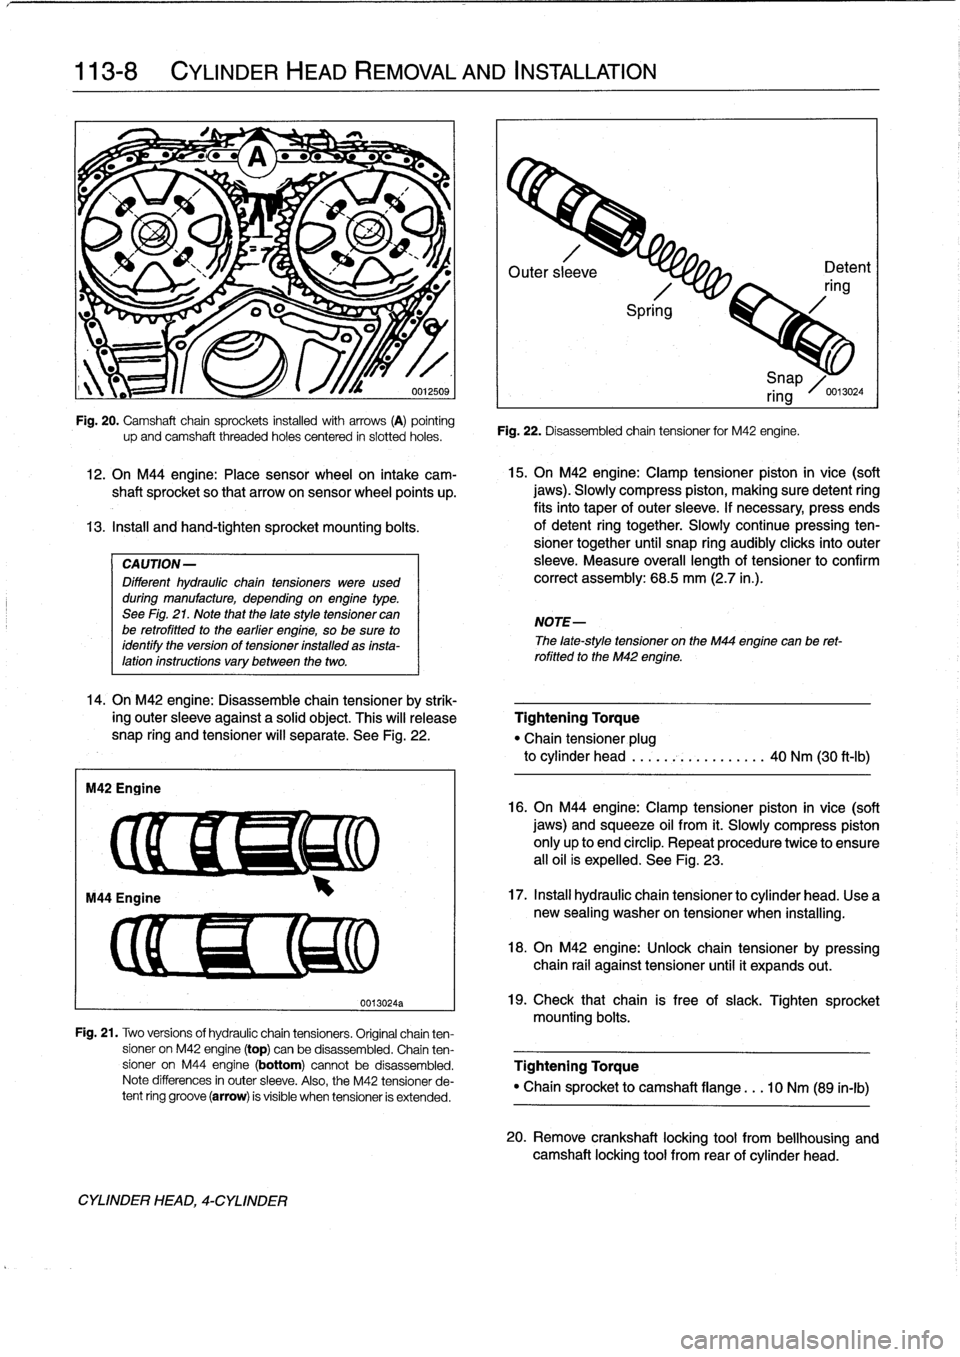 BMW 318i 1995 E36 Workshop Manual 
113-8

	

CYLINDER
HEAD
REMOVAL
AND
INSTALLATION

IW?
-
L
/~f
W

	

~
4r

"

-
"

	

;,s
1

12
.
On
M44
engine
:
Place
sensor
wheel
on
intake
cam-
shaft
sprocket
so
that
arrowon
sensor
wheel
points
